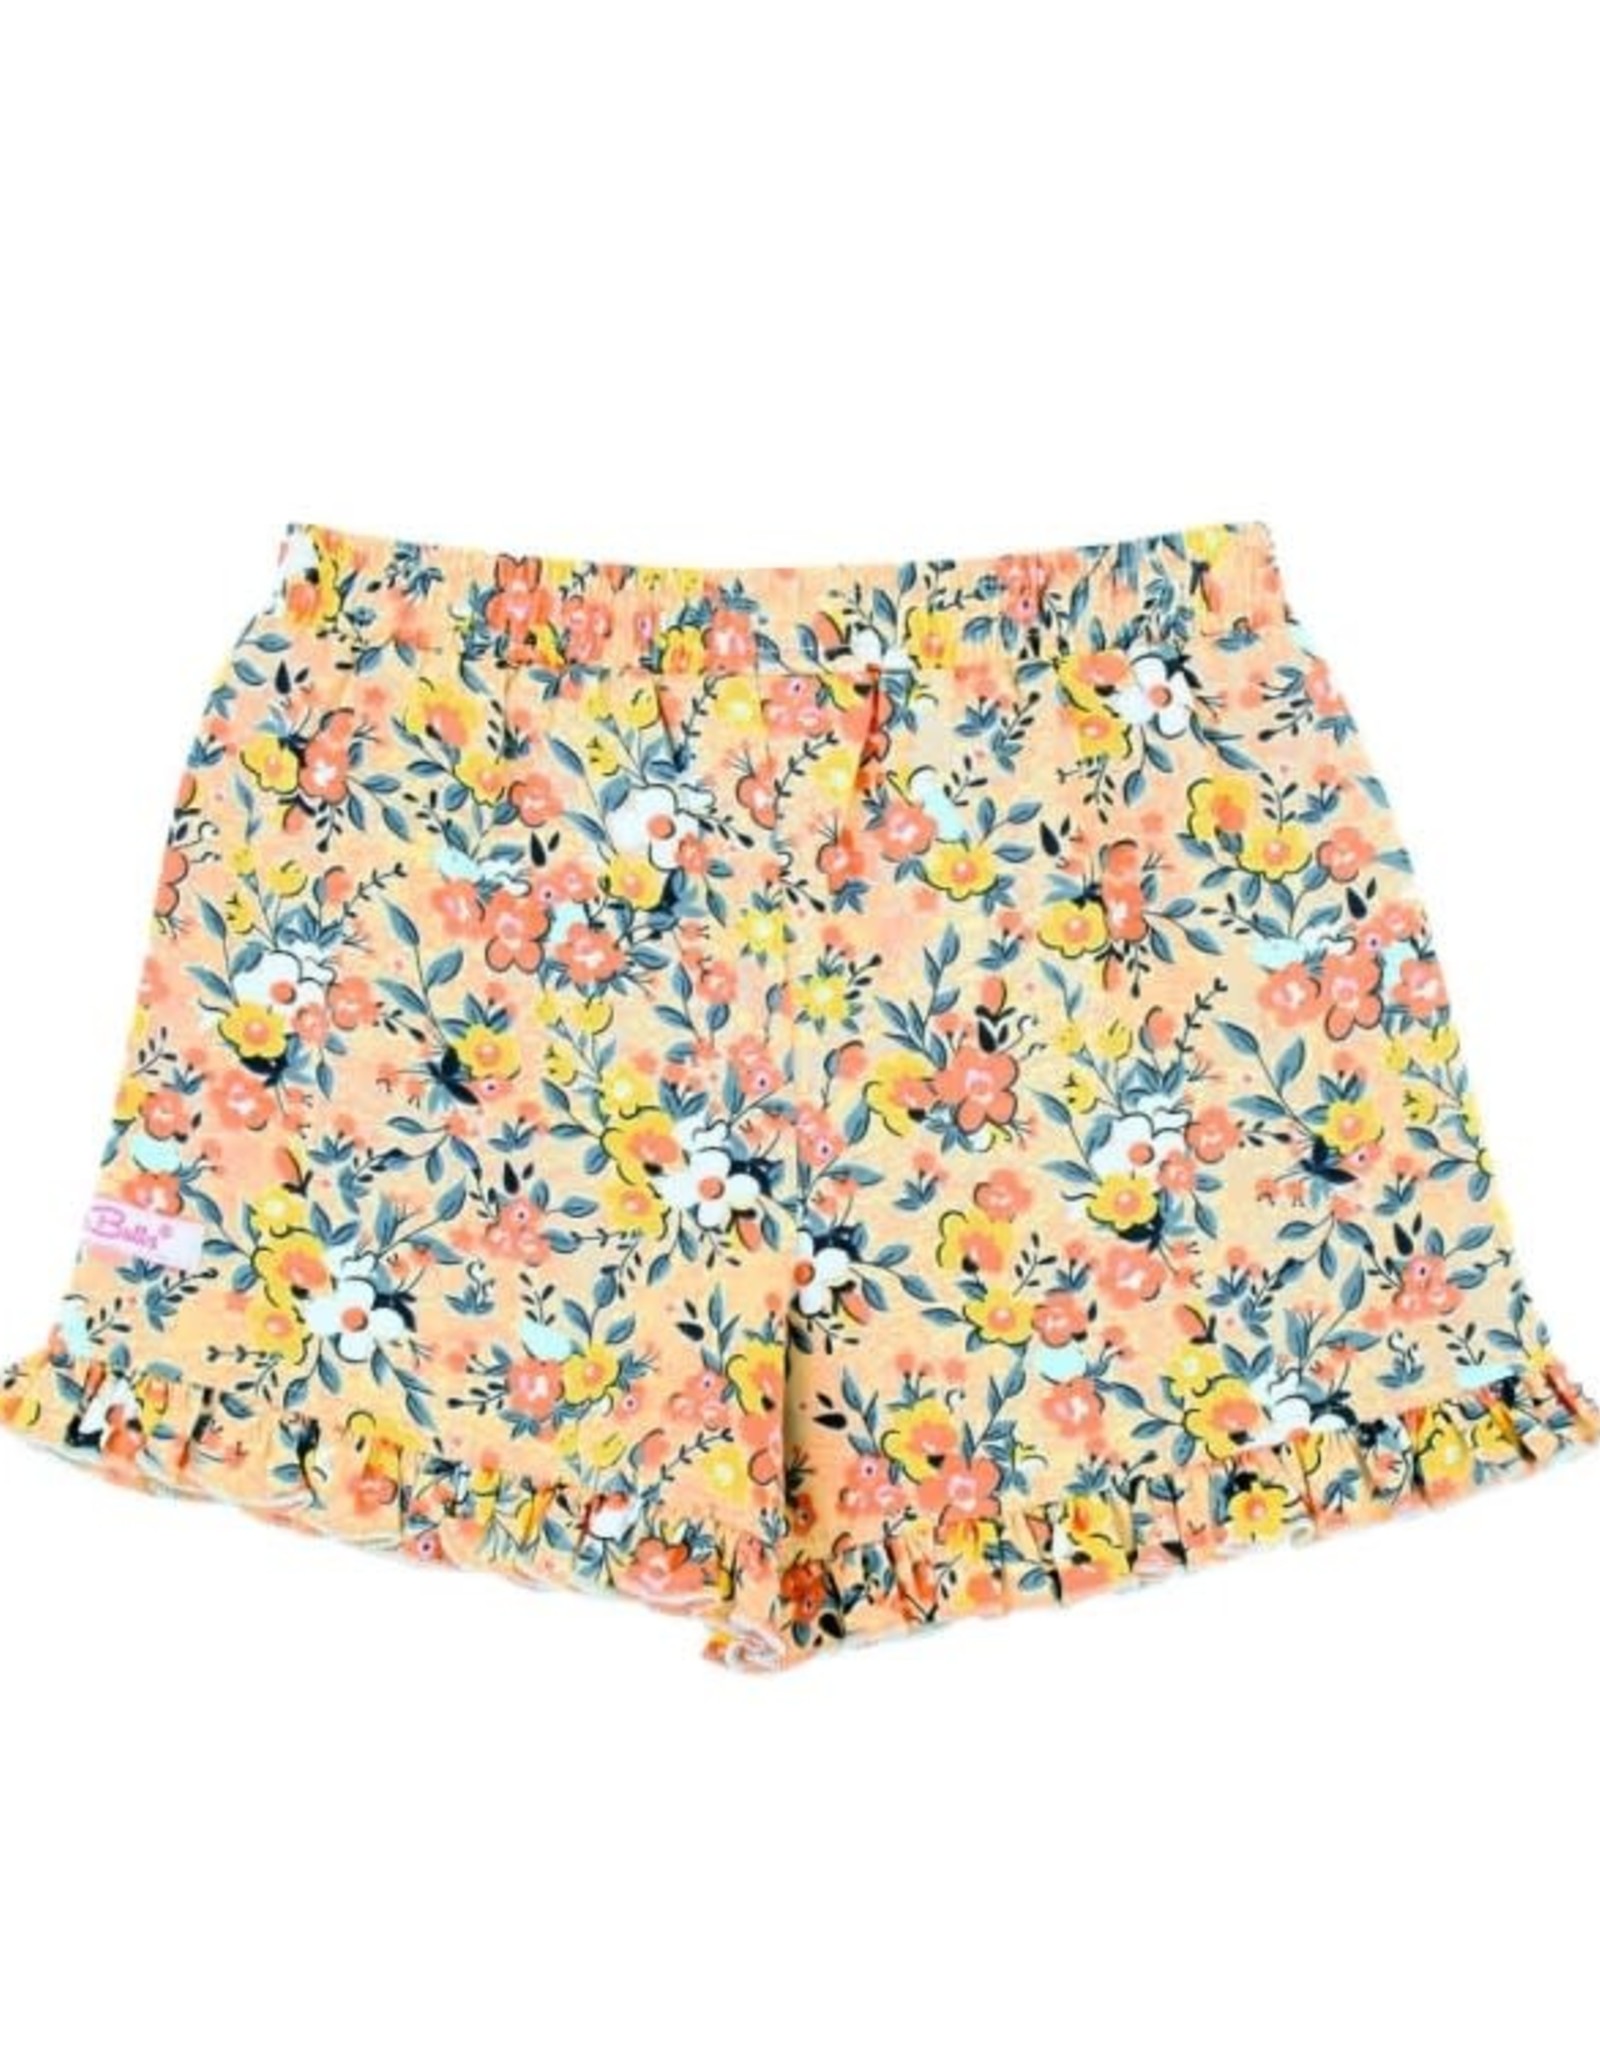 RuffleButts Summer Blooms Ruffle Shorts